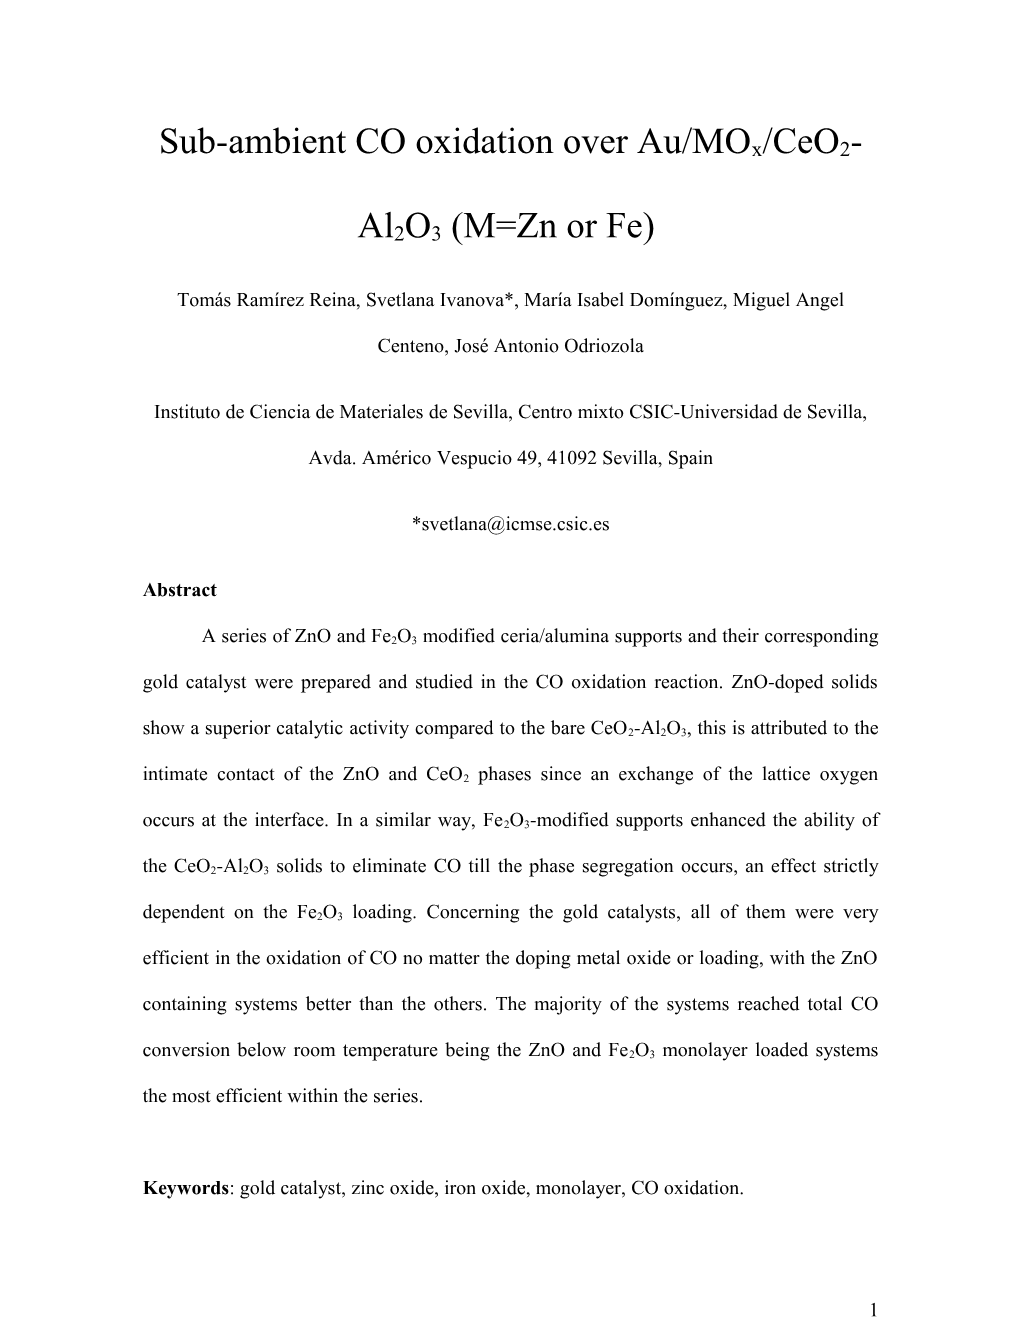 Sub-Ambient CO Oxidation Over Au/Mox/Ceo2-Al2o3 (M=Zn Or Fe)